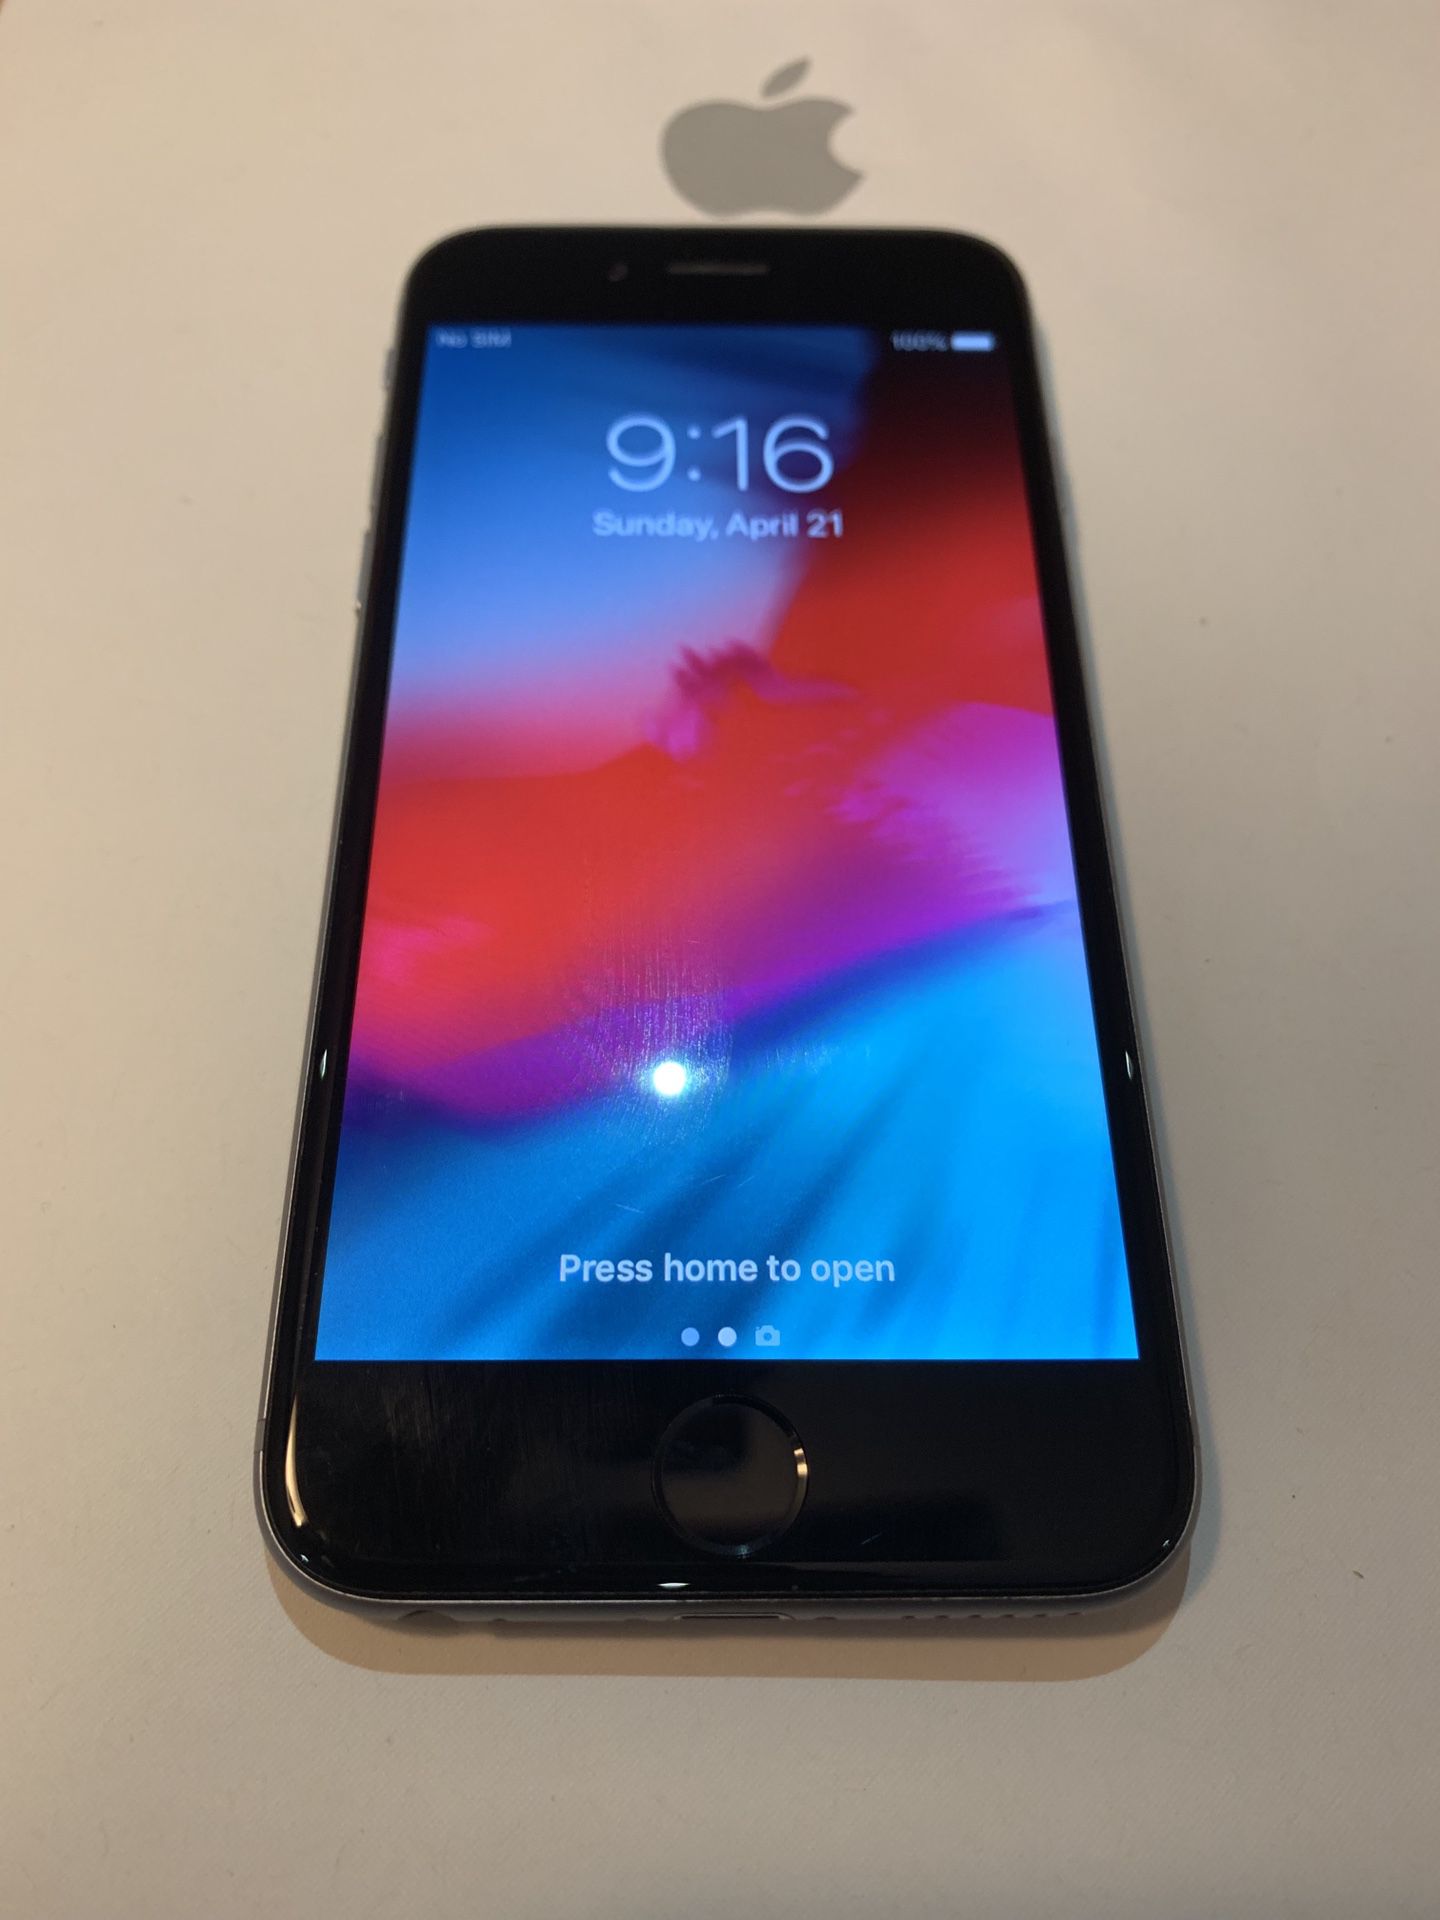 iPhone 6 - 16GB - UNLOCKED! - Space Gray (Metro PCs, Cricket, T-Mobile, Verizon & More!)